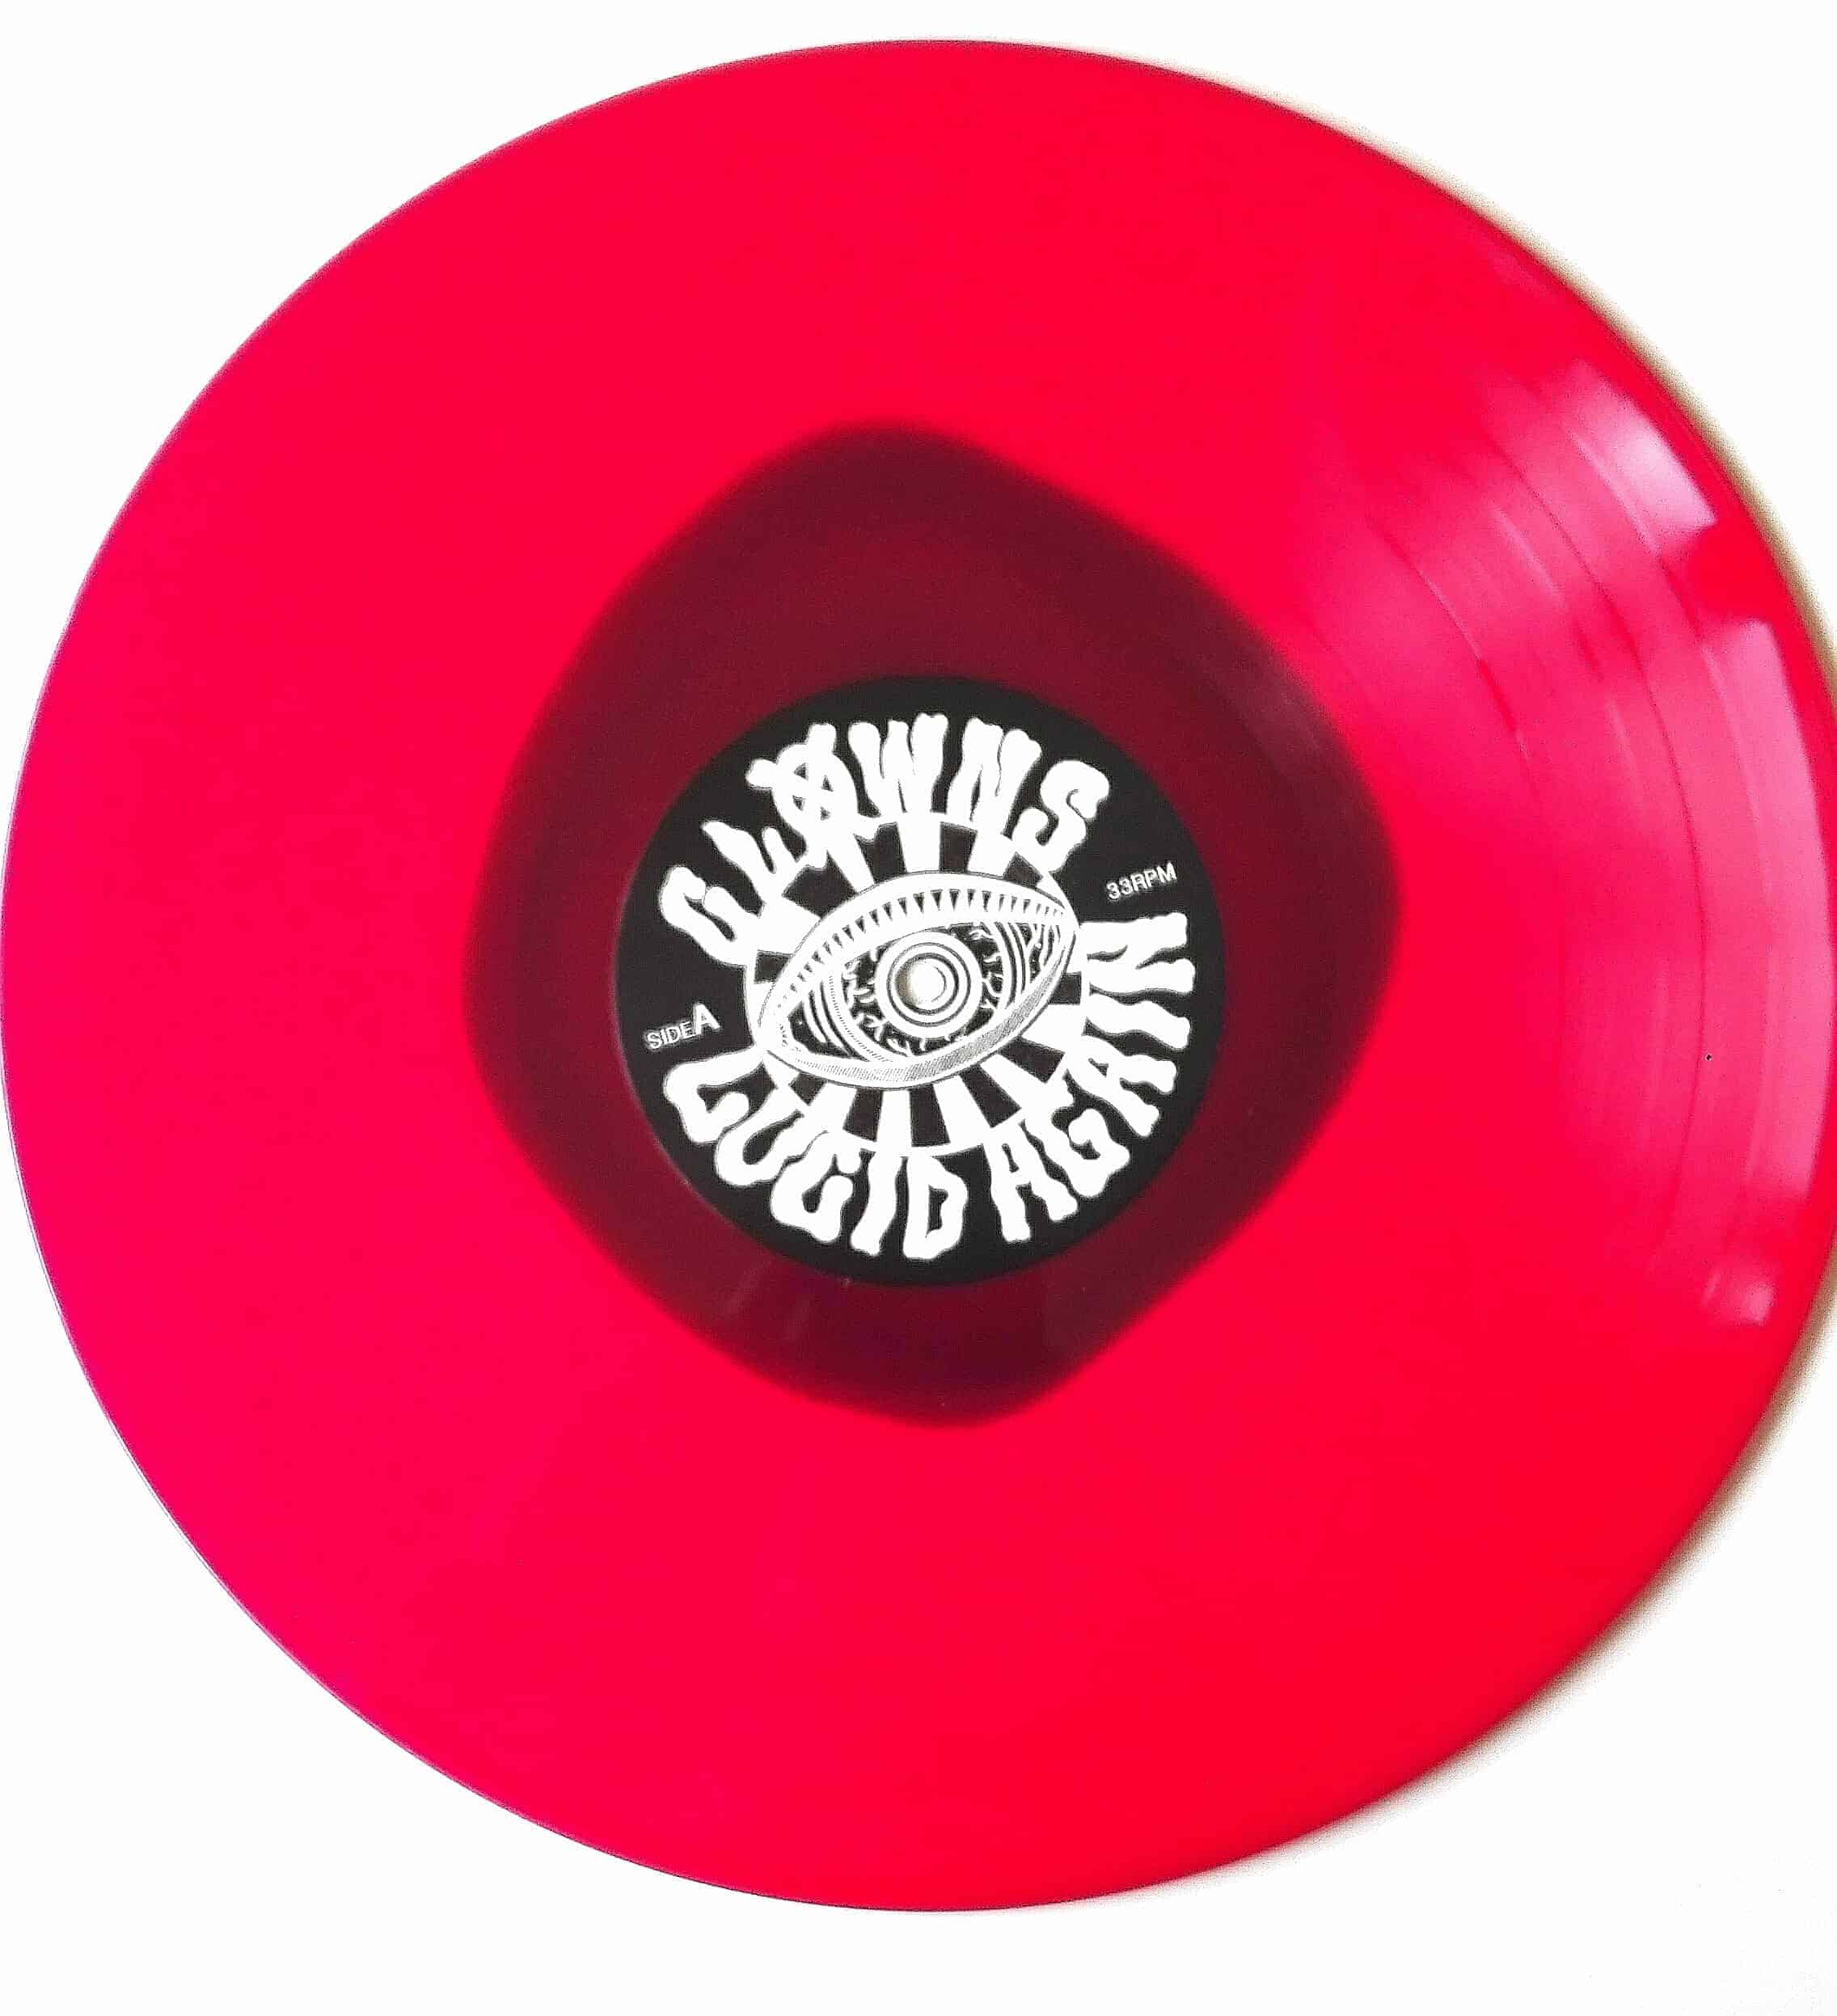 Clowns – Lucid Again LP/CD Format: ultra clear with black dot